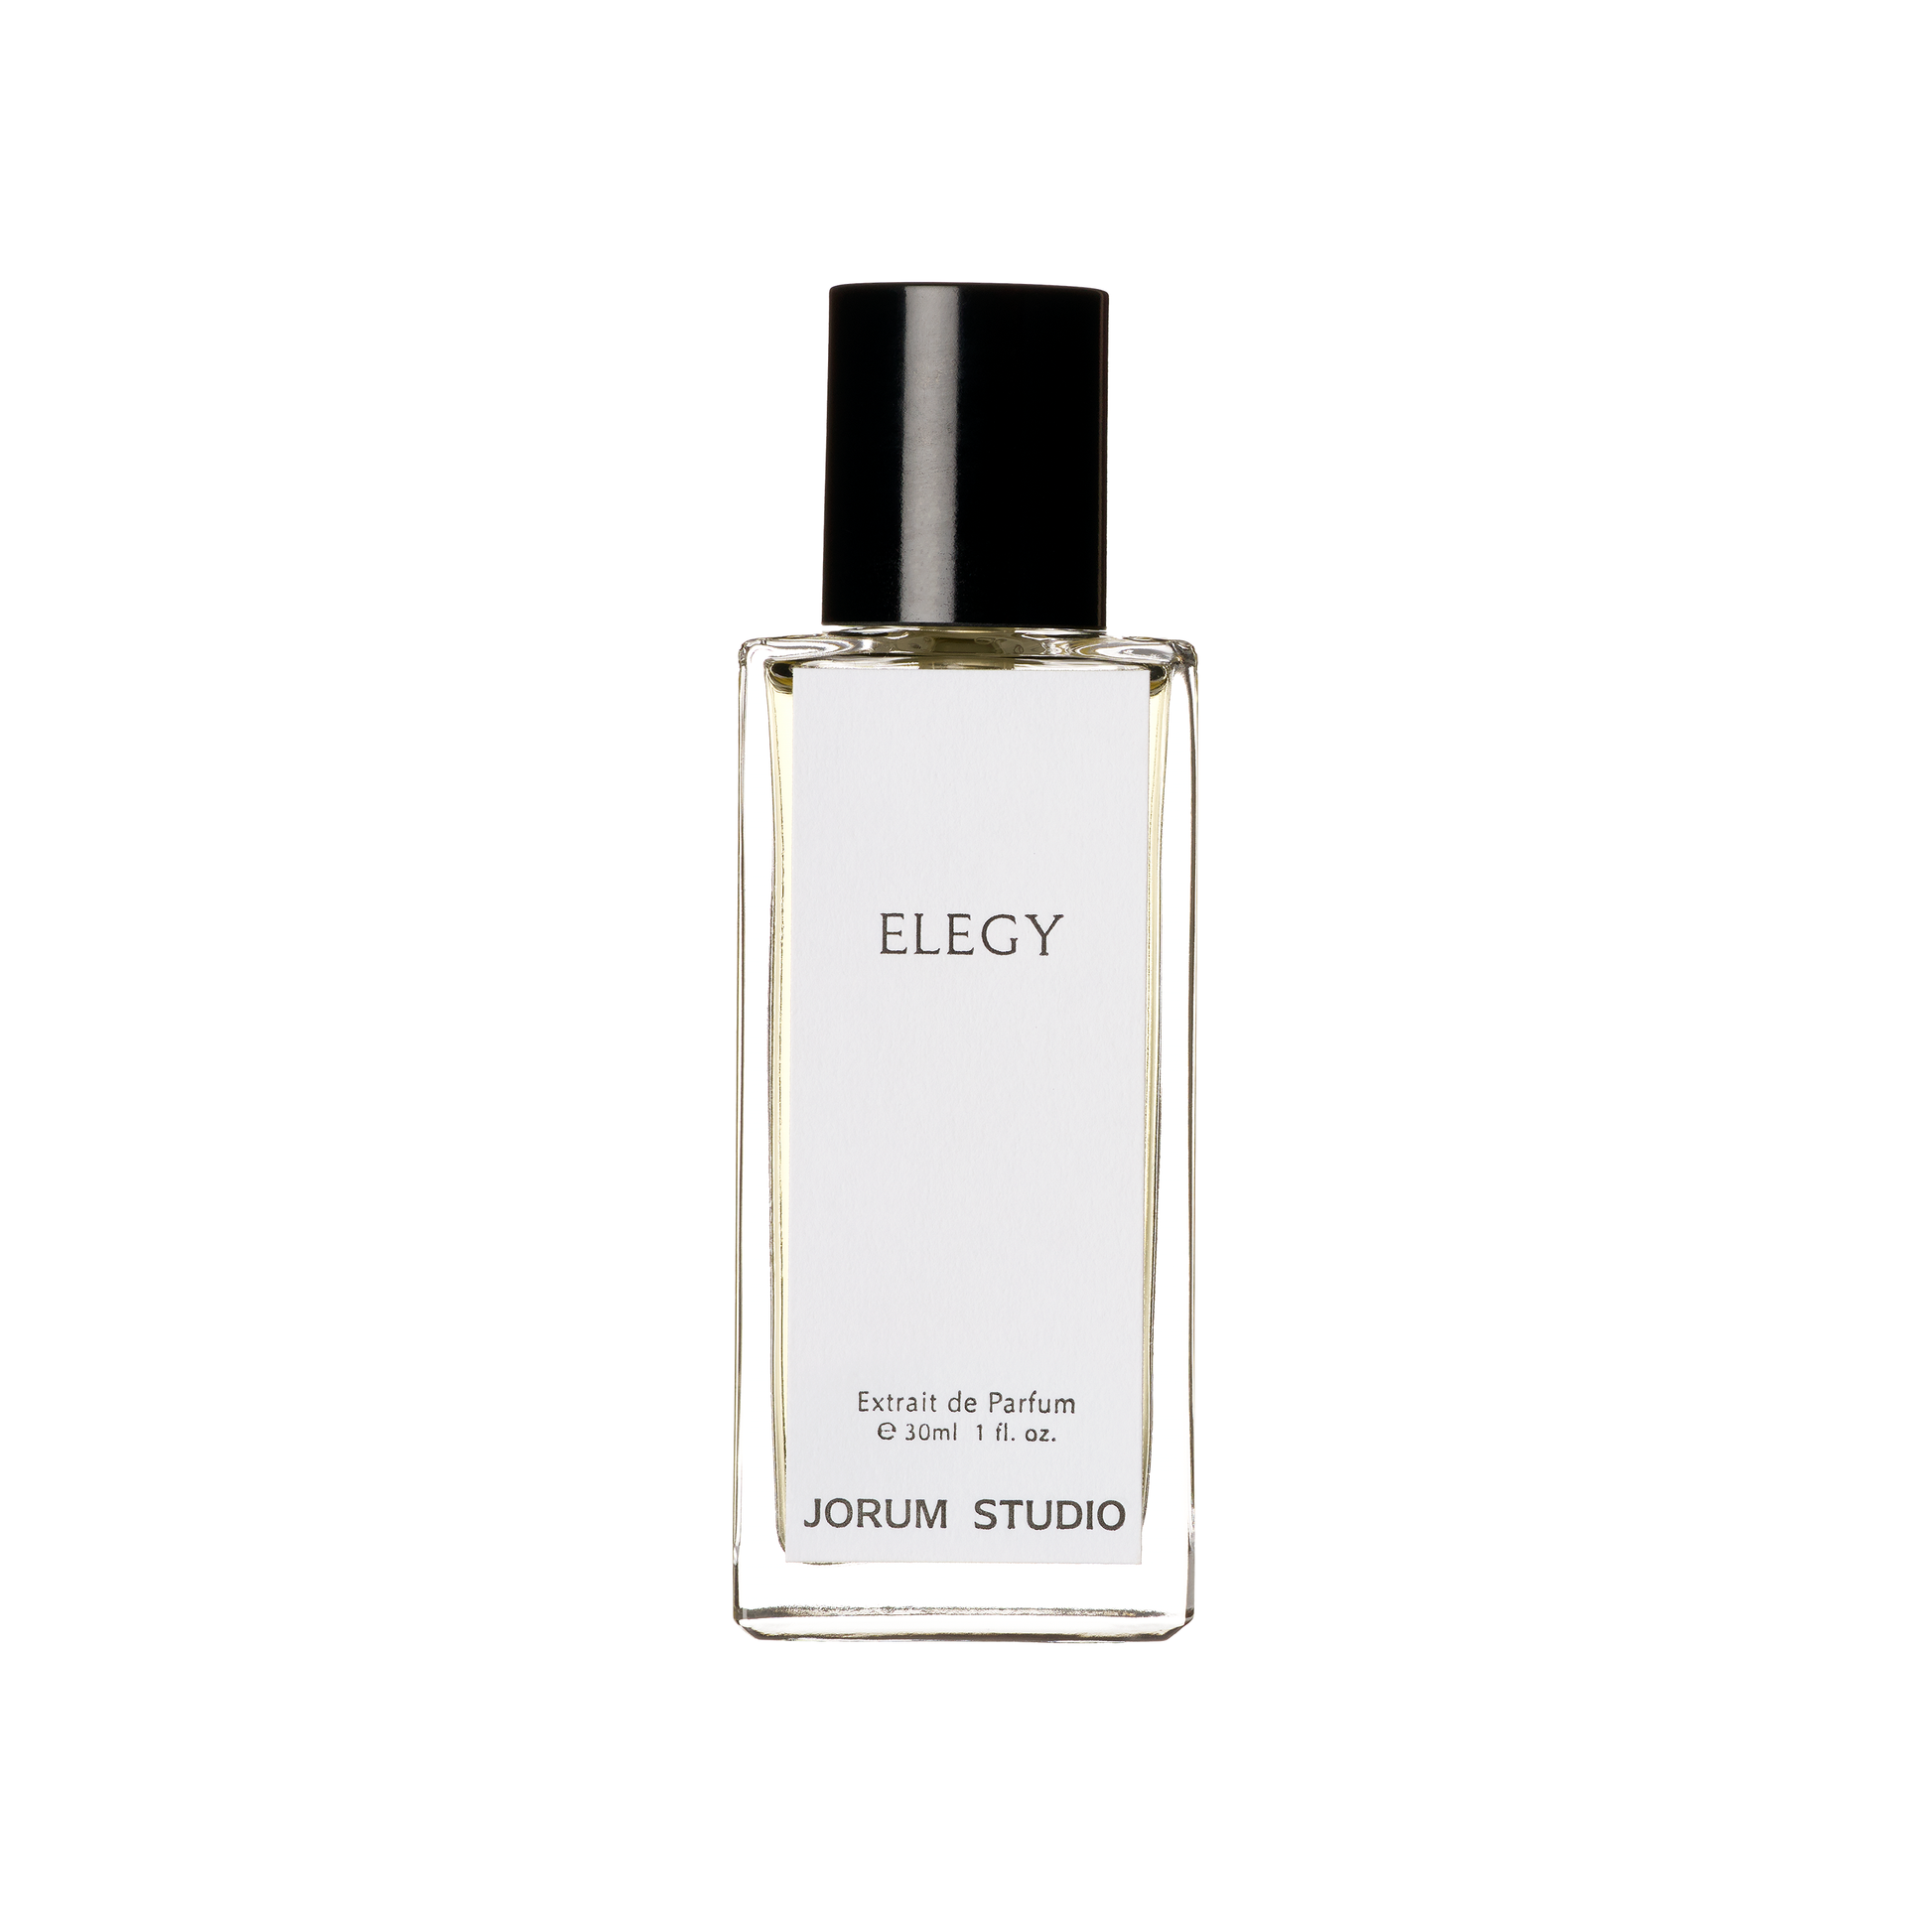 30ml bottle of Elegy Extrait de Parfum by independent Scottish perfumers Jorum Studio